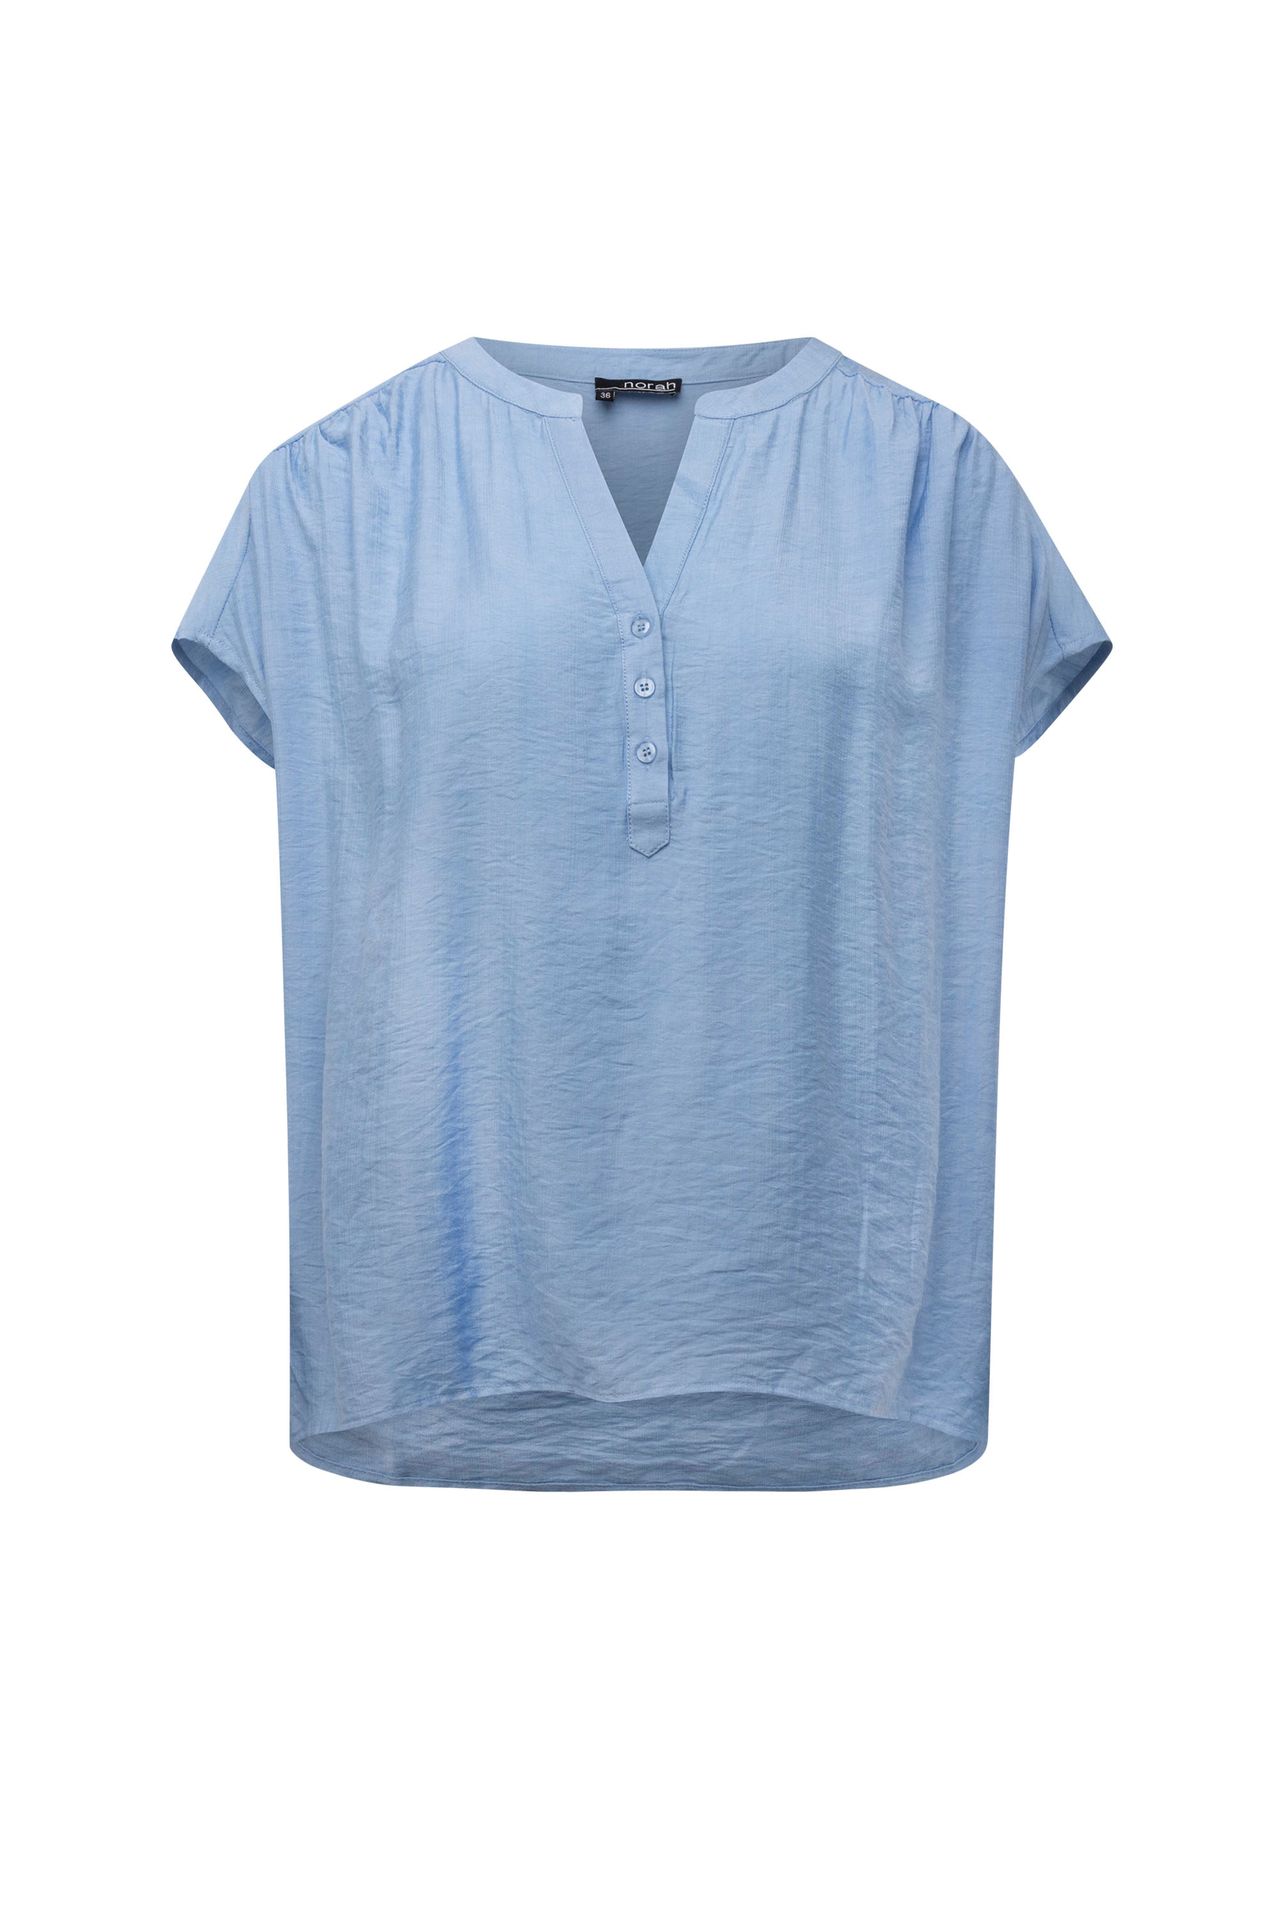  Blauwe blouse light blue 214671-401-42